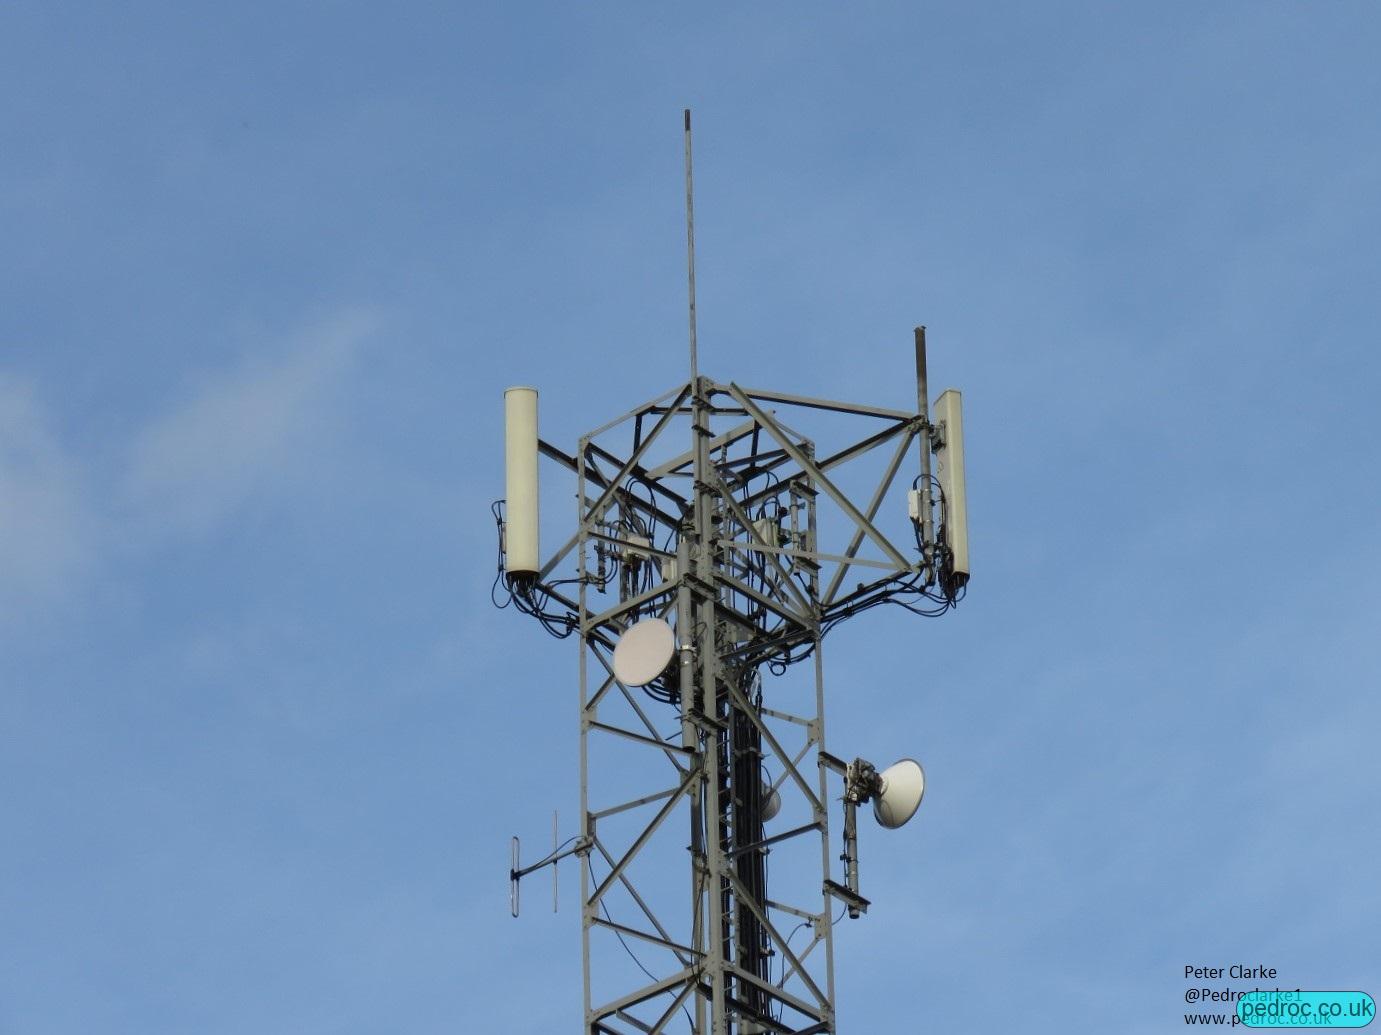 Closeup Commscope antennas for EE/3 on the West Beckham mast.